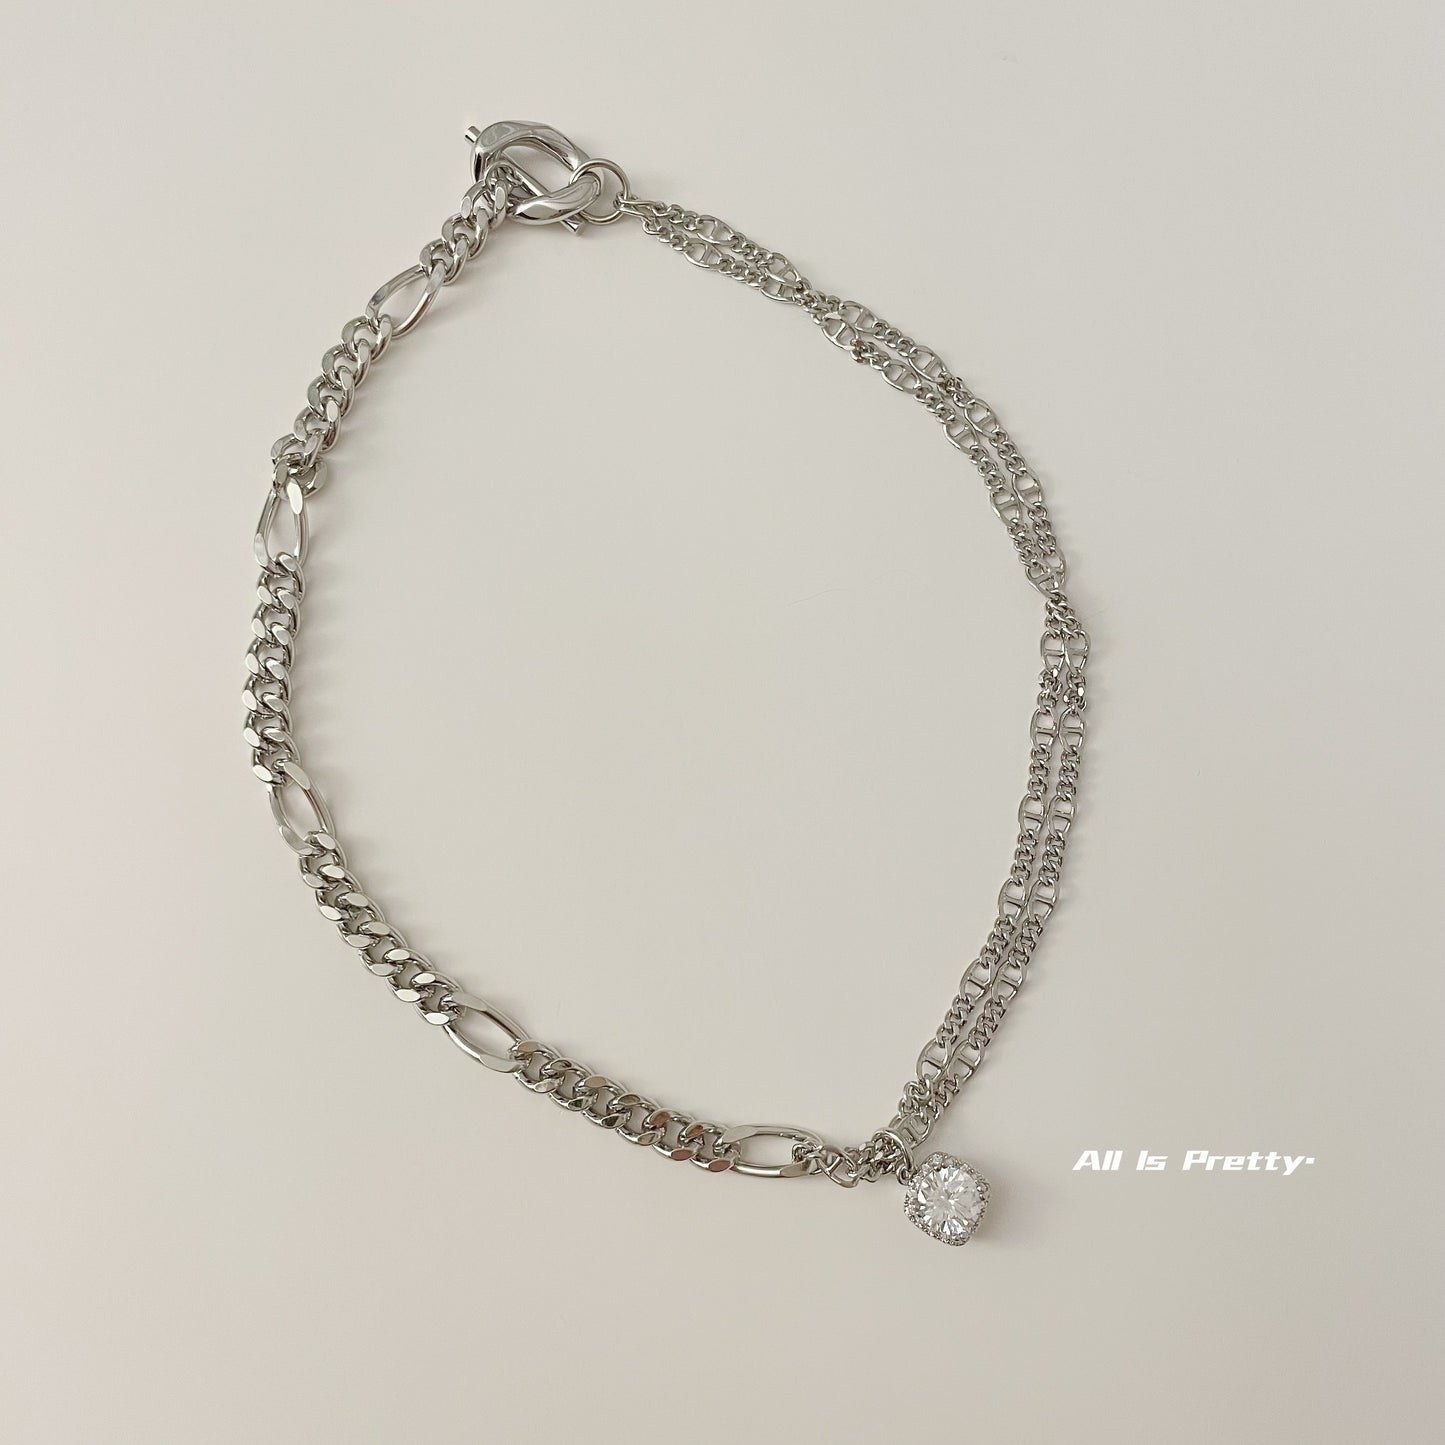 Multi layer chain necklace